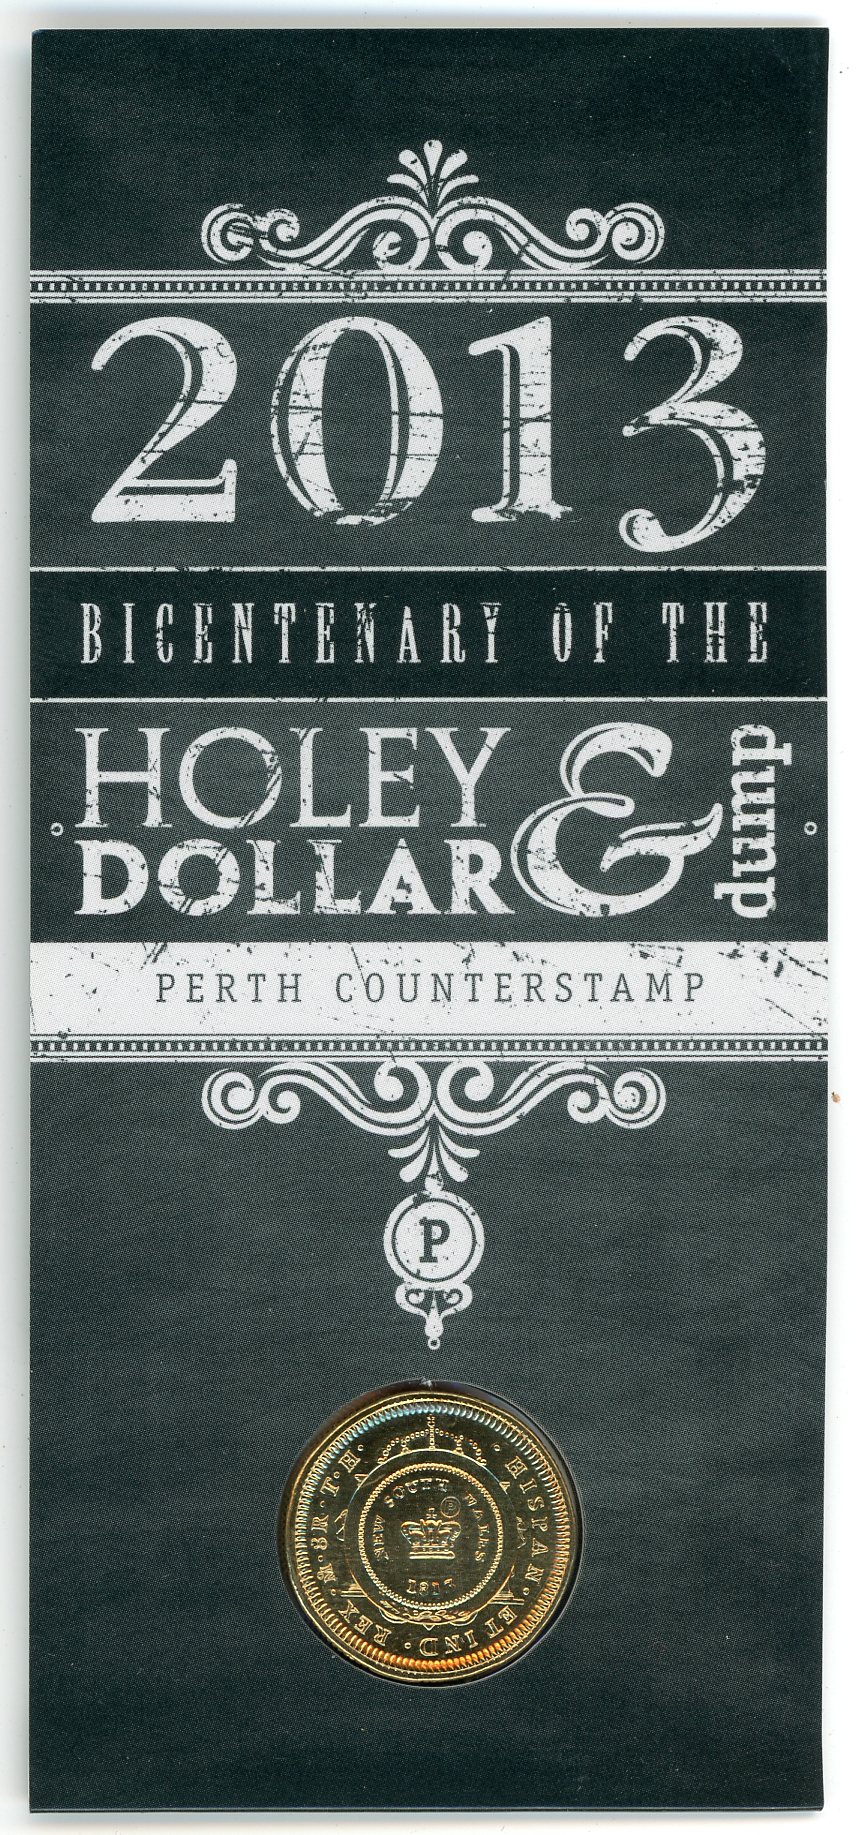 Thumbnail for 2013 Holey Dollar & Dump Bicentenary - P Counterstamp